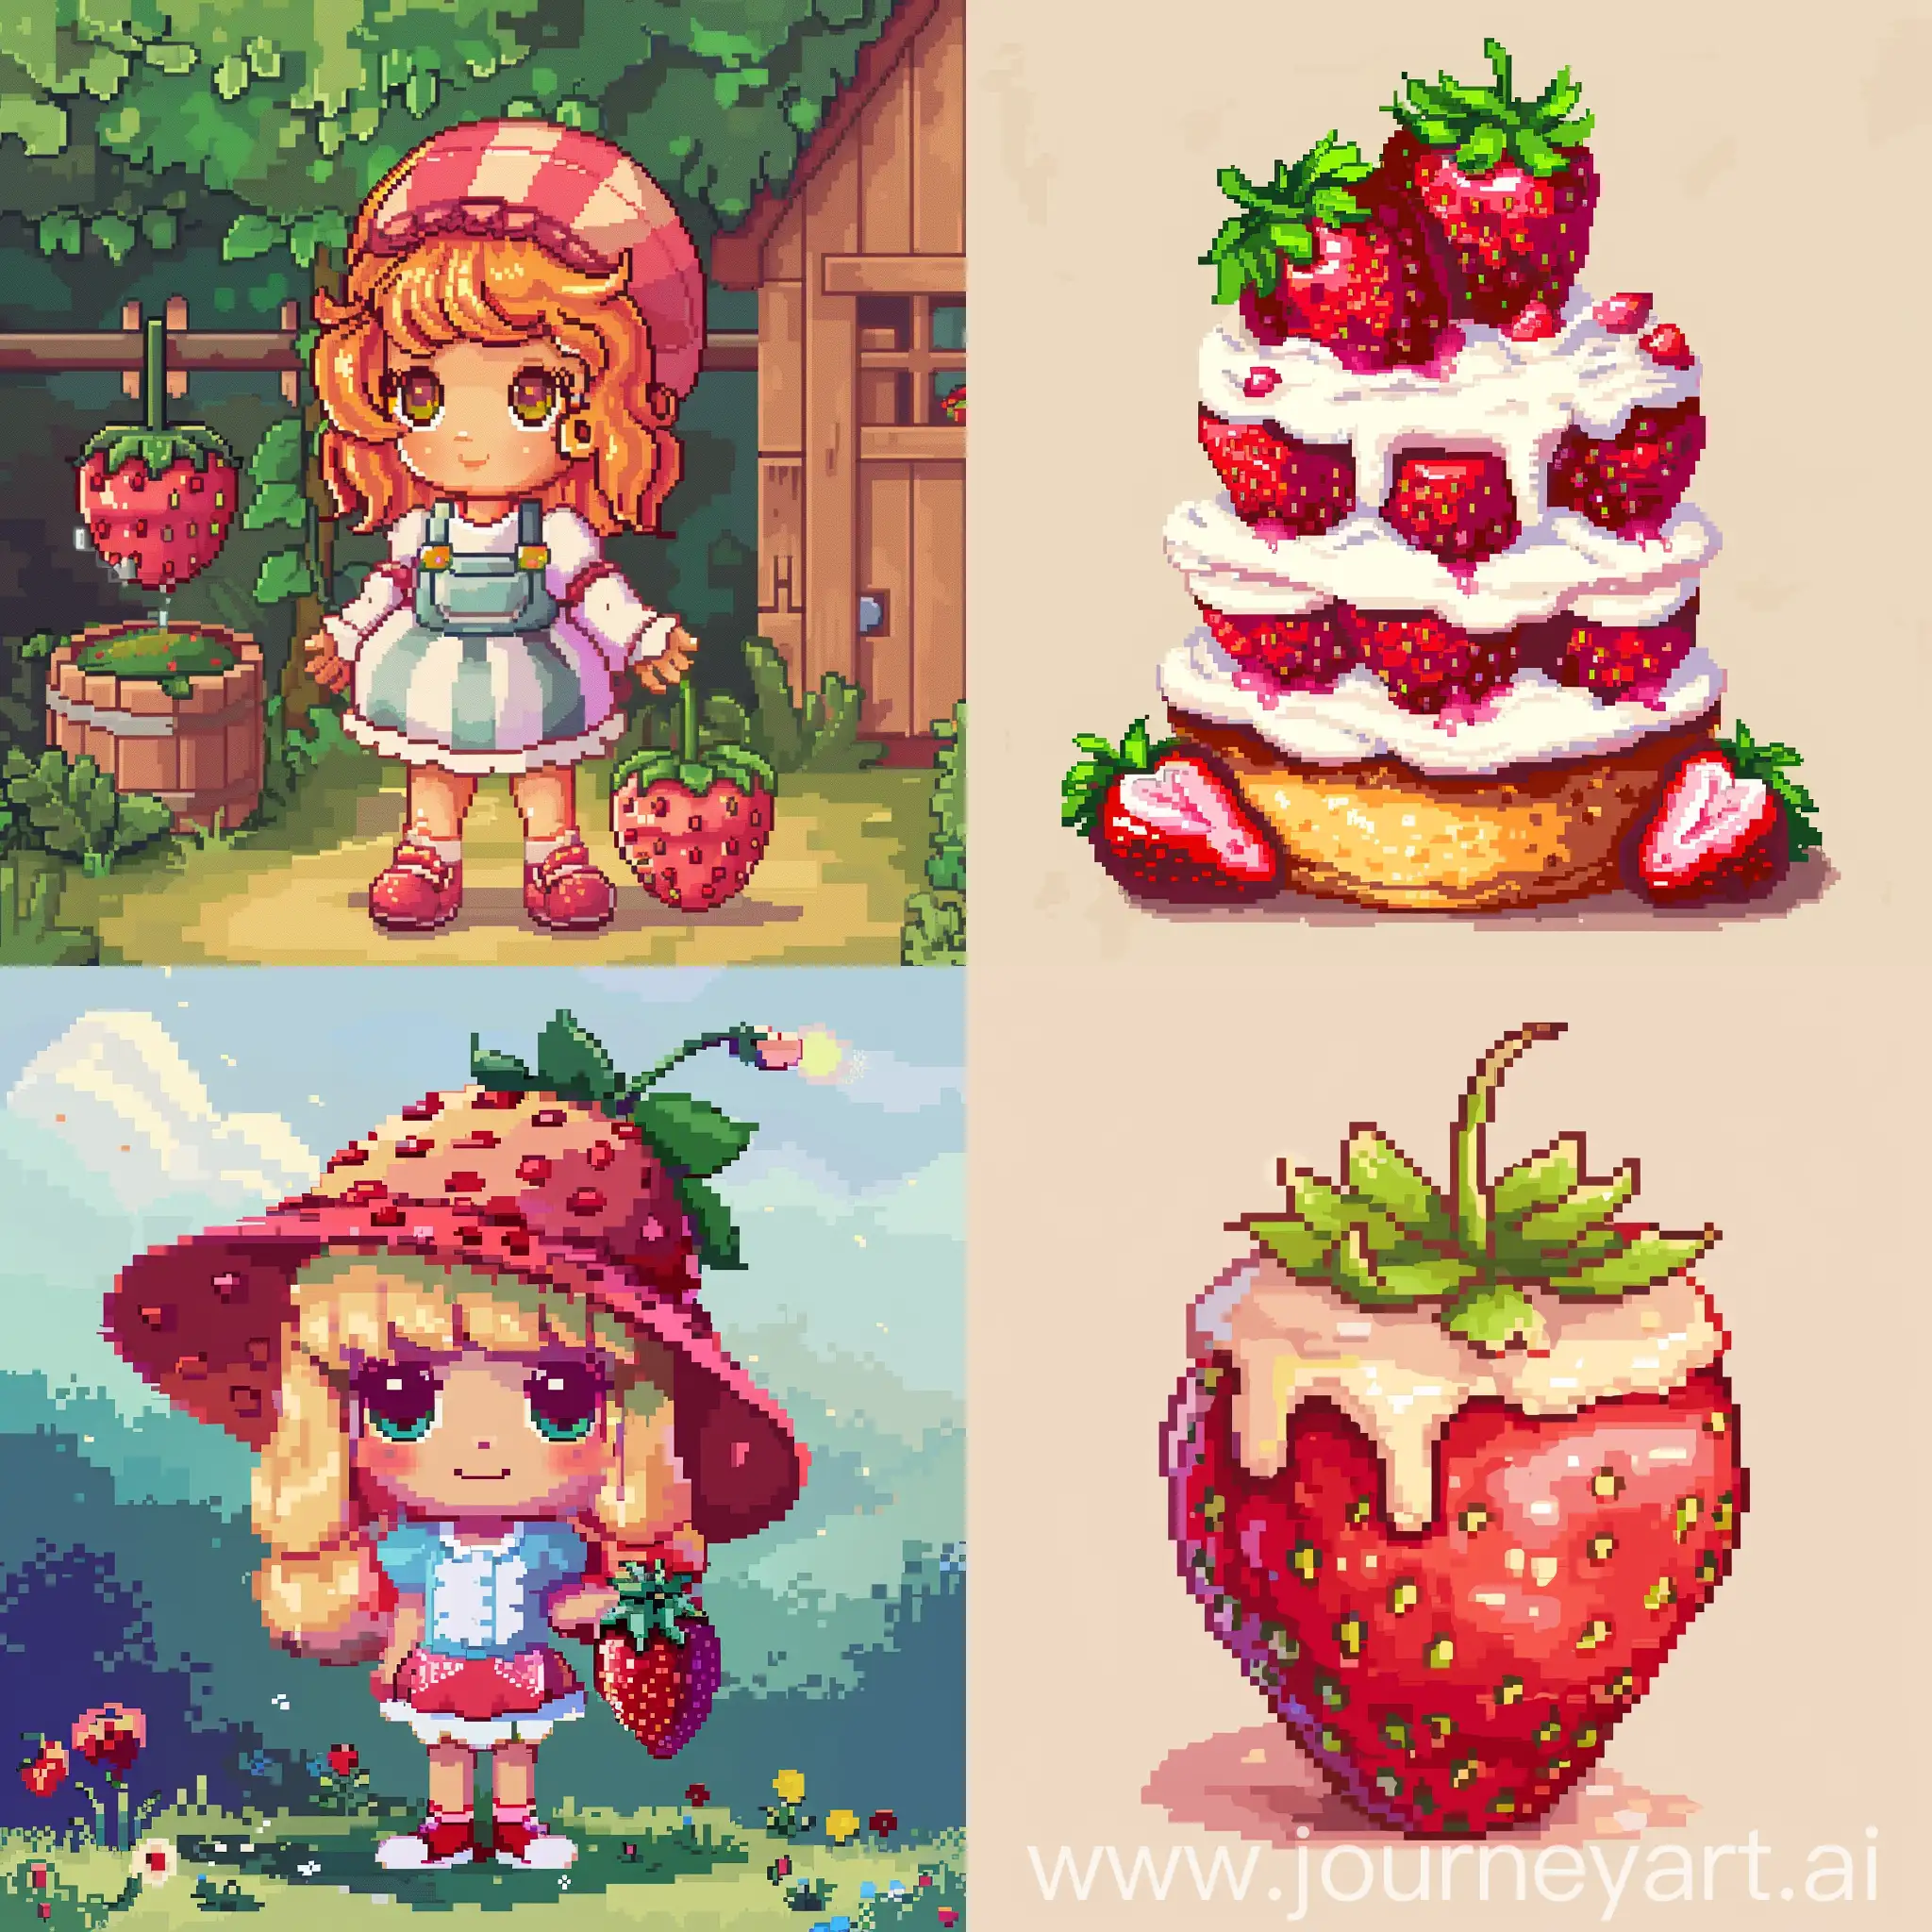 Simple pixel art of strawberry shortcake cartoon